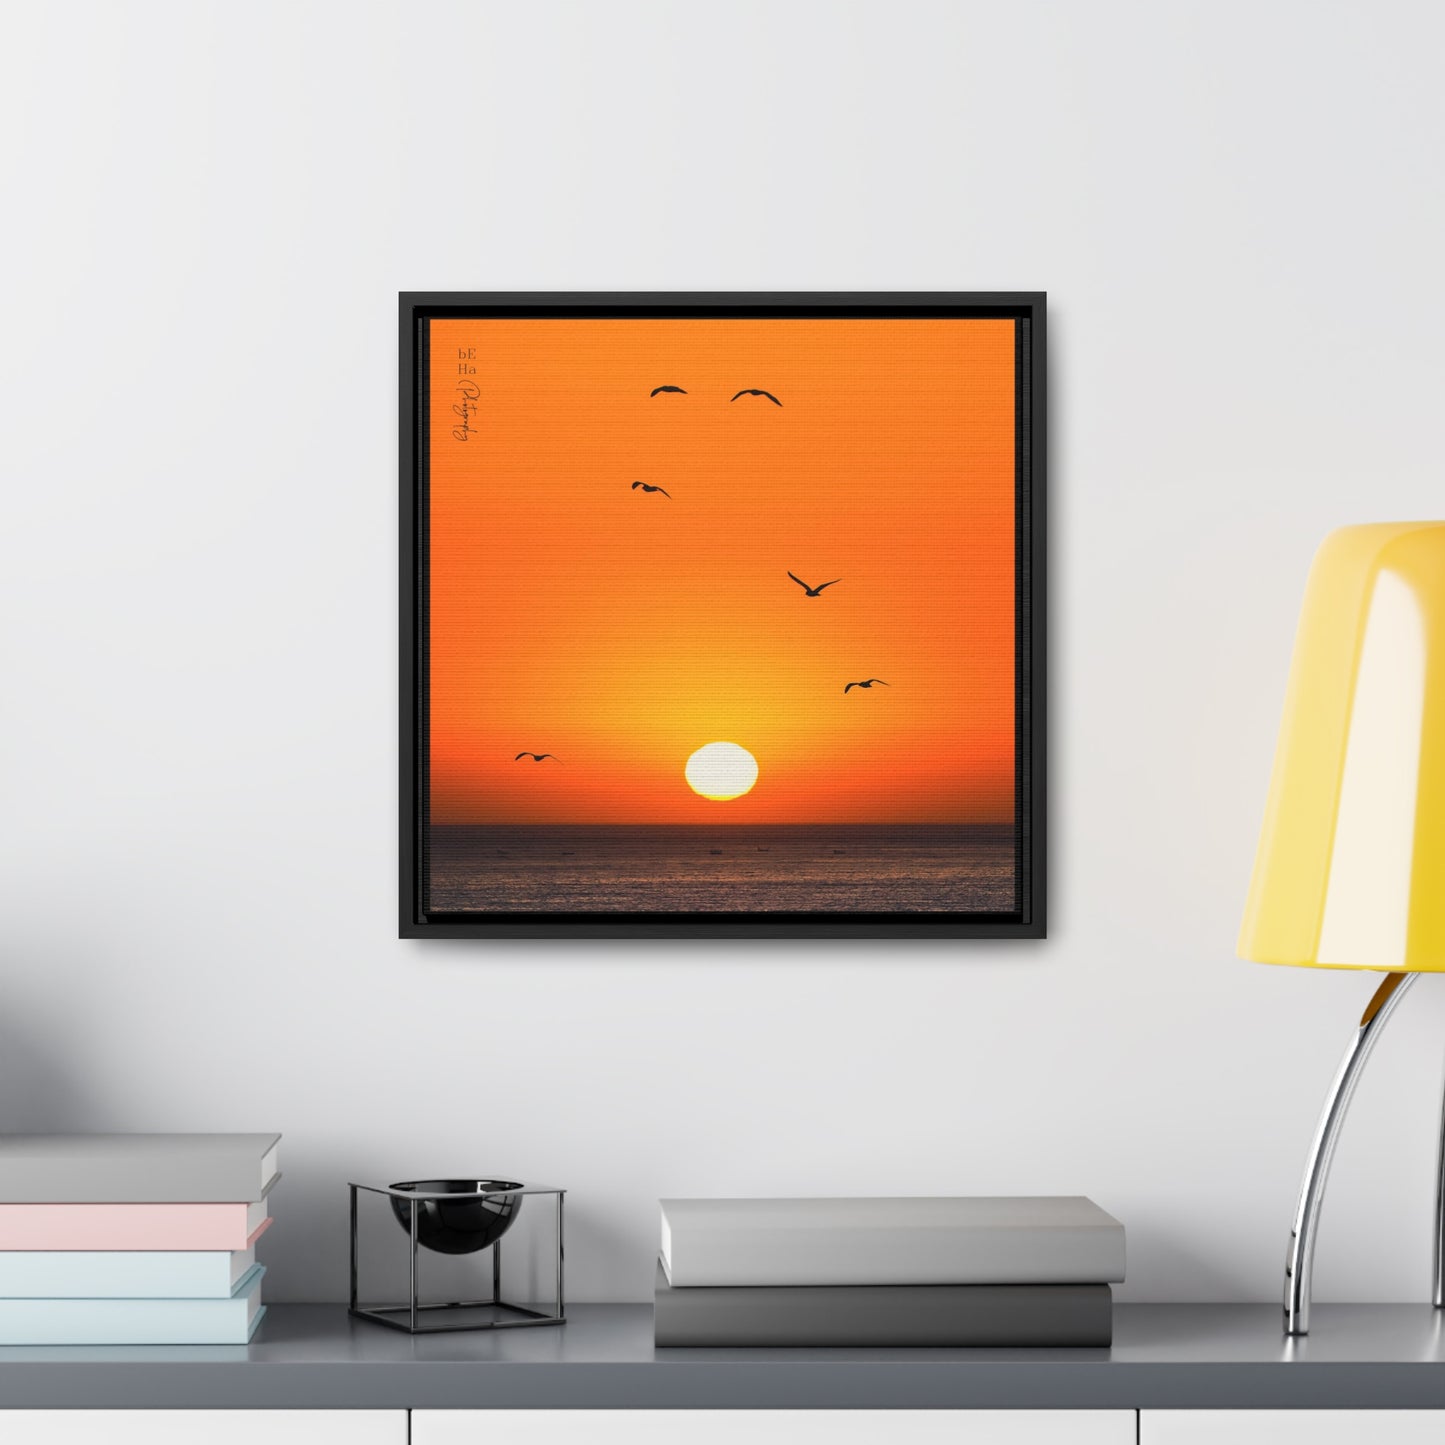 Gallery Canvas Wraps, Square Frame - BeHaP Sunset Birds